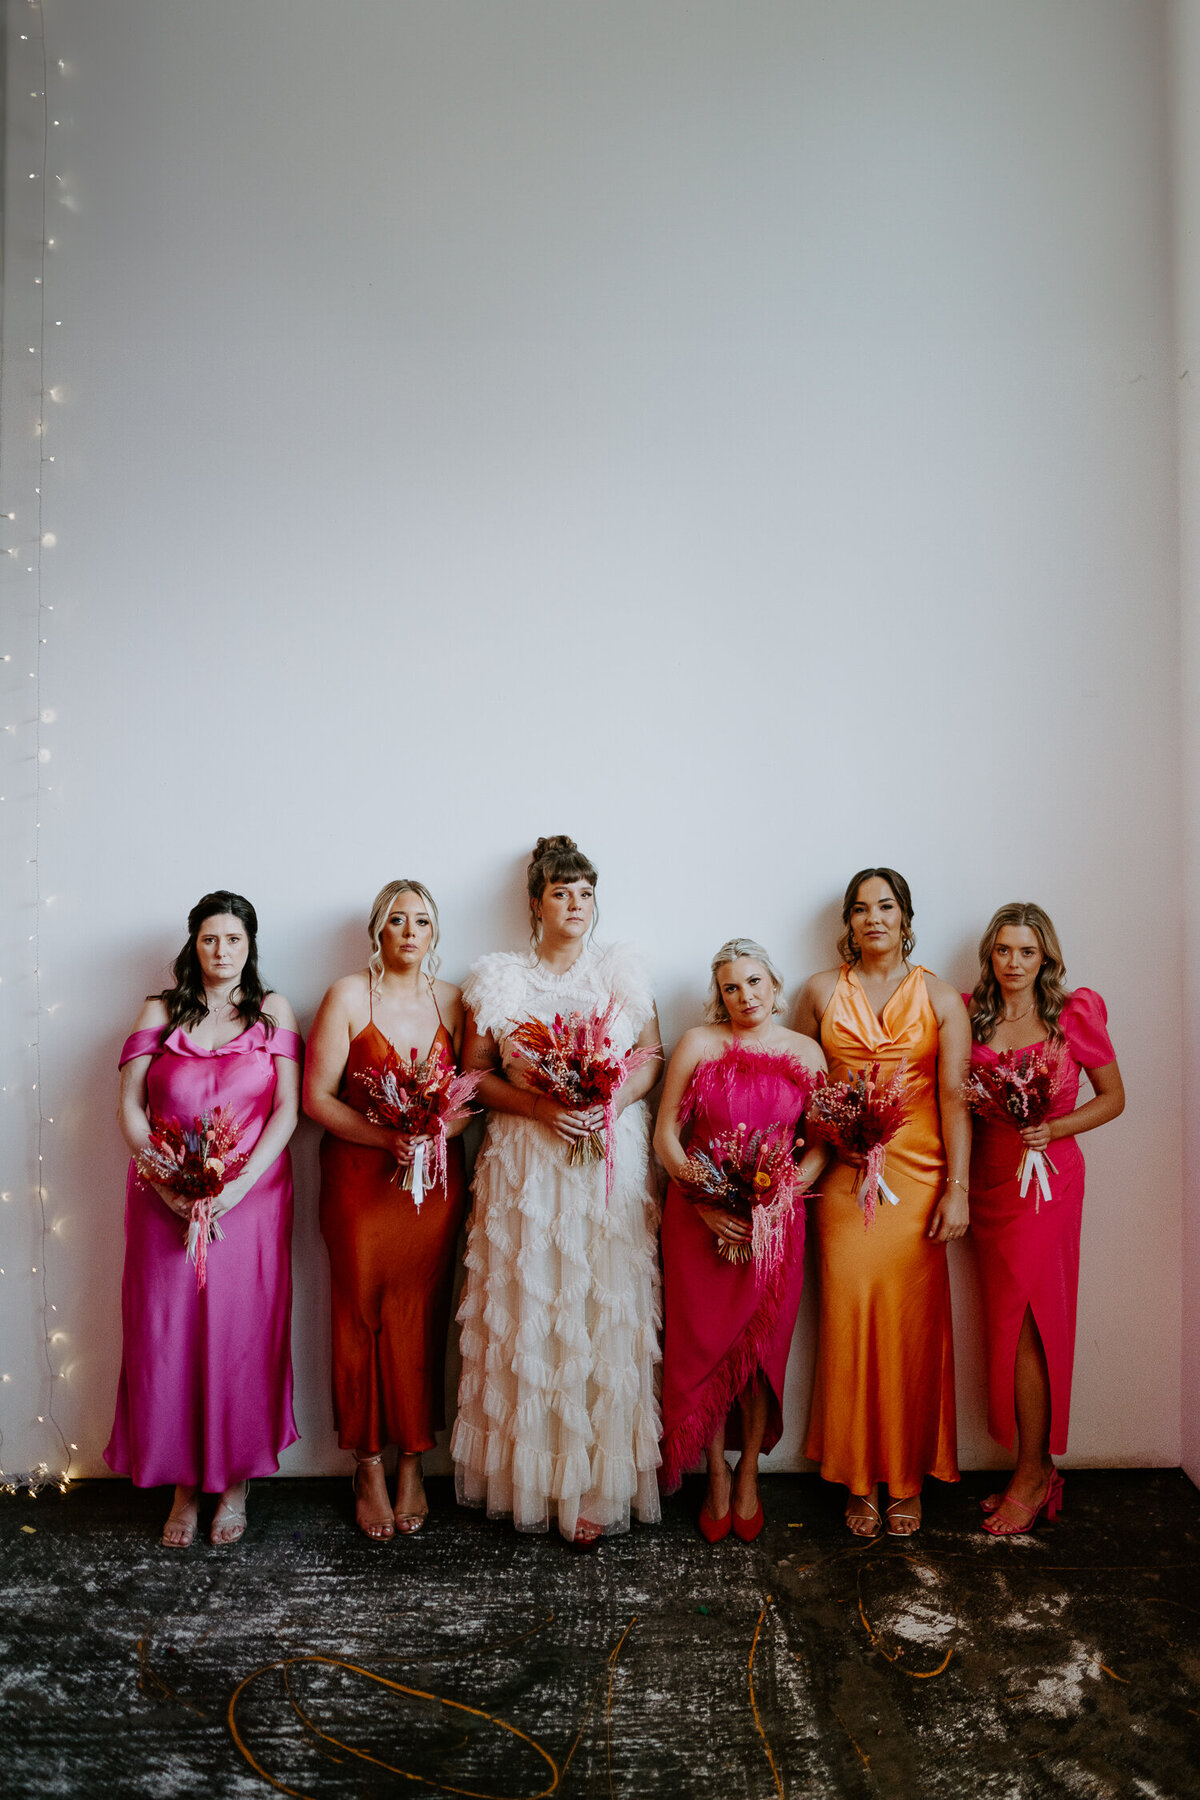 Bridesmaids wearing pink dresses and a bride wearing a vintage fringe wedding dress at Trafalgar Warehouse in Sheffield.